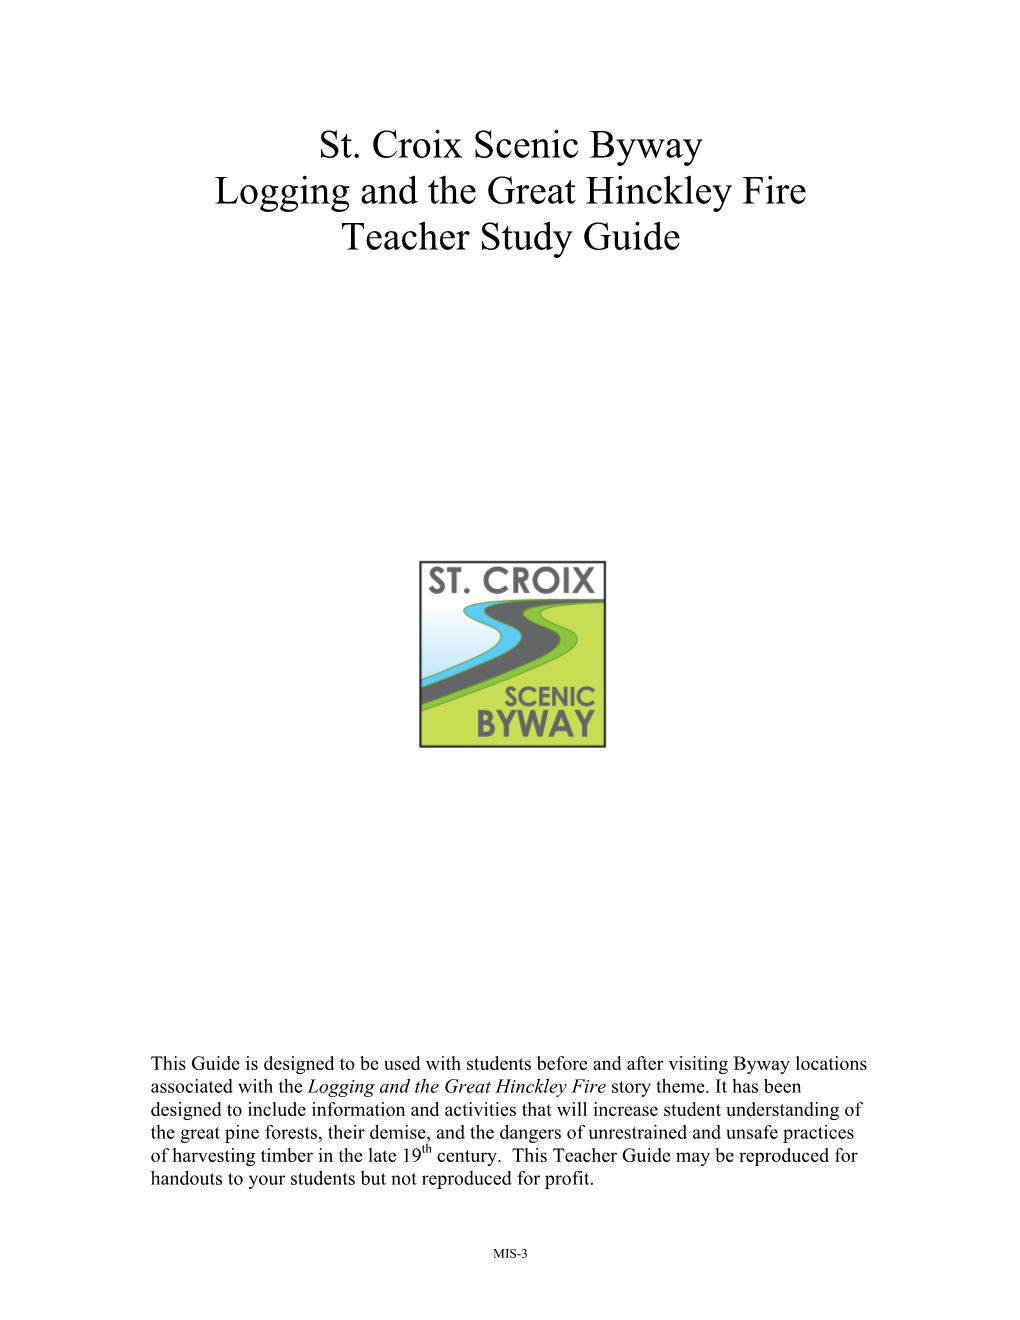 Logging Hinckley Fire Teachers Guide